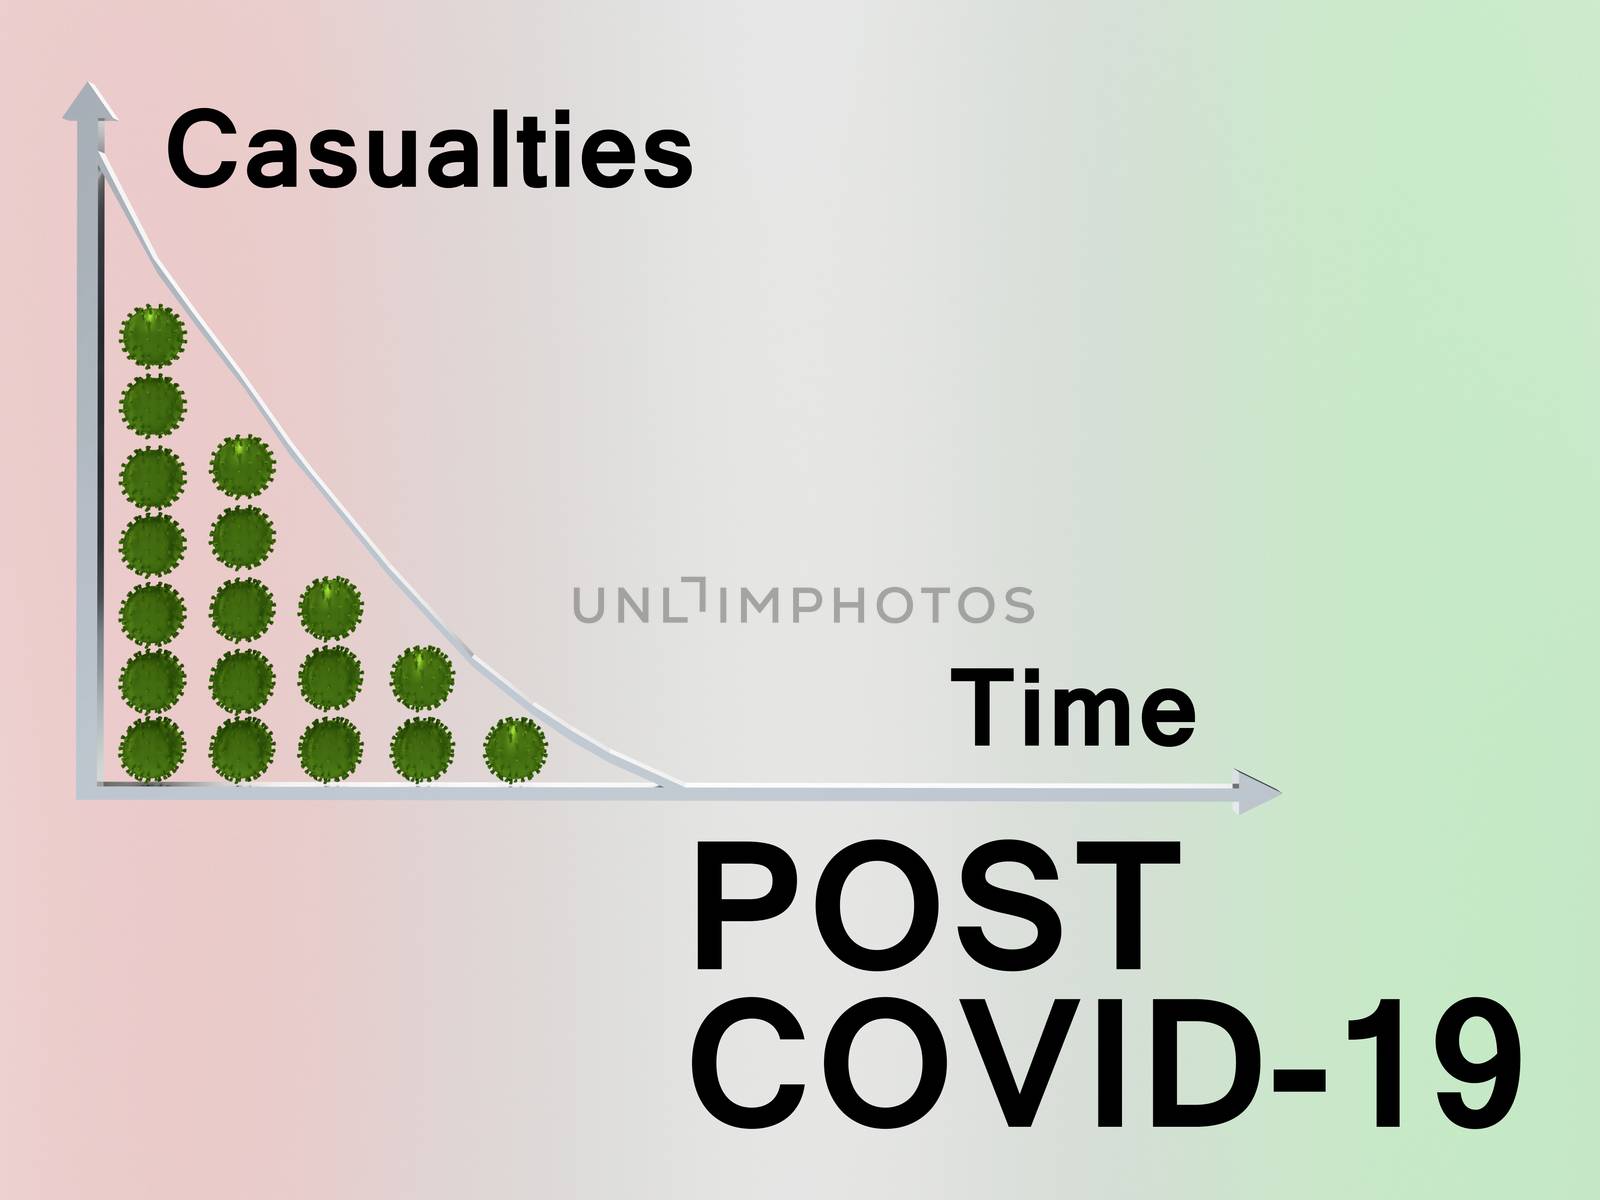 POST COVID-19 concept by HD_premium_shots